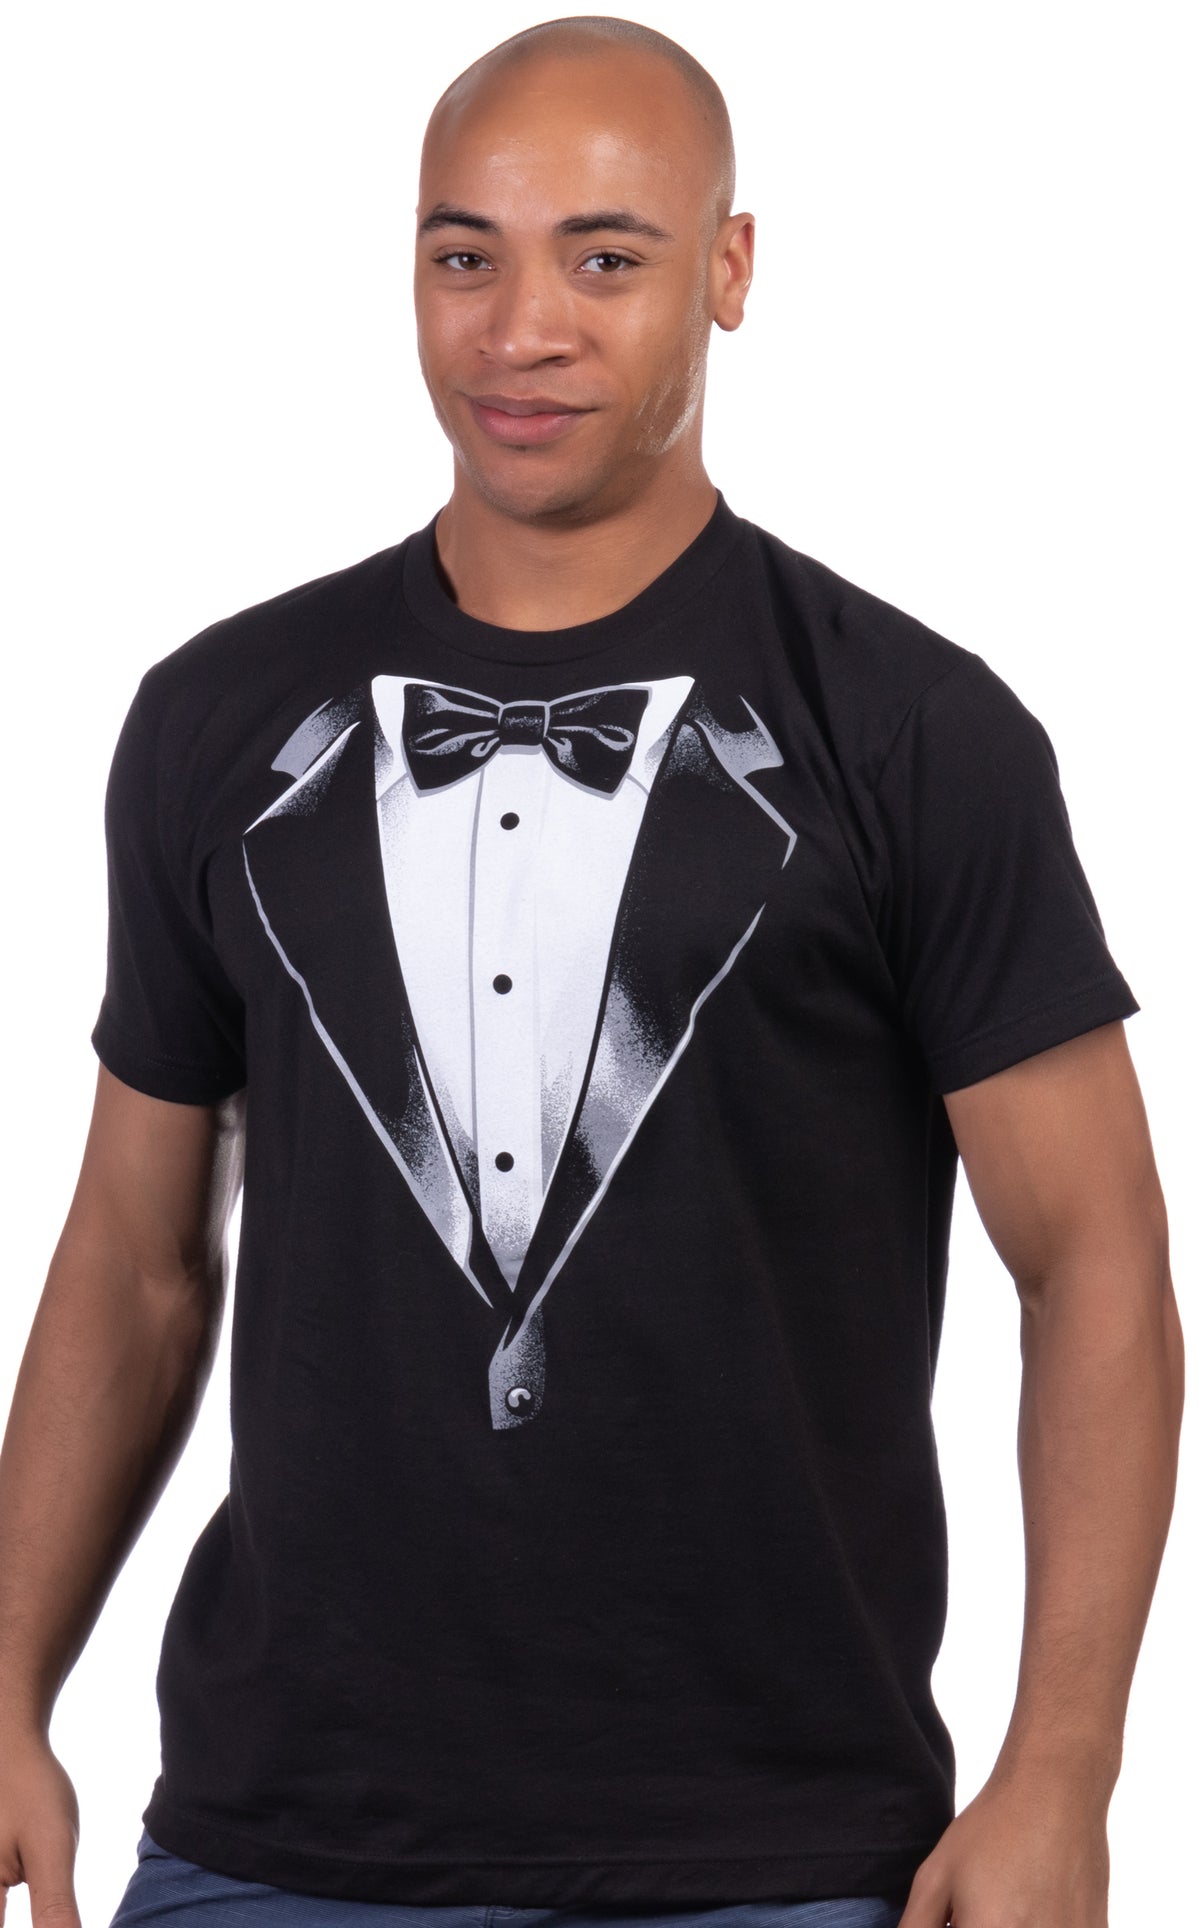 Tuxedo T-shirt - Funny Wedding Party Humor Tux Tee Joke Shirt for Men